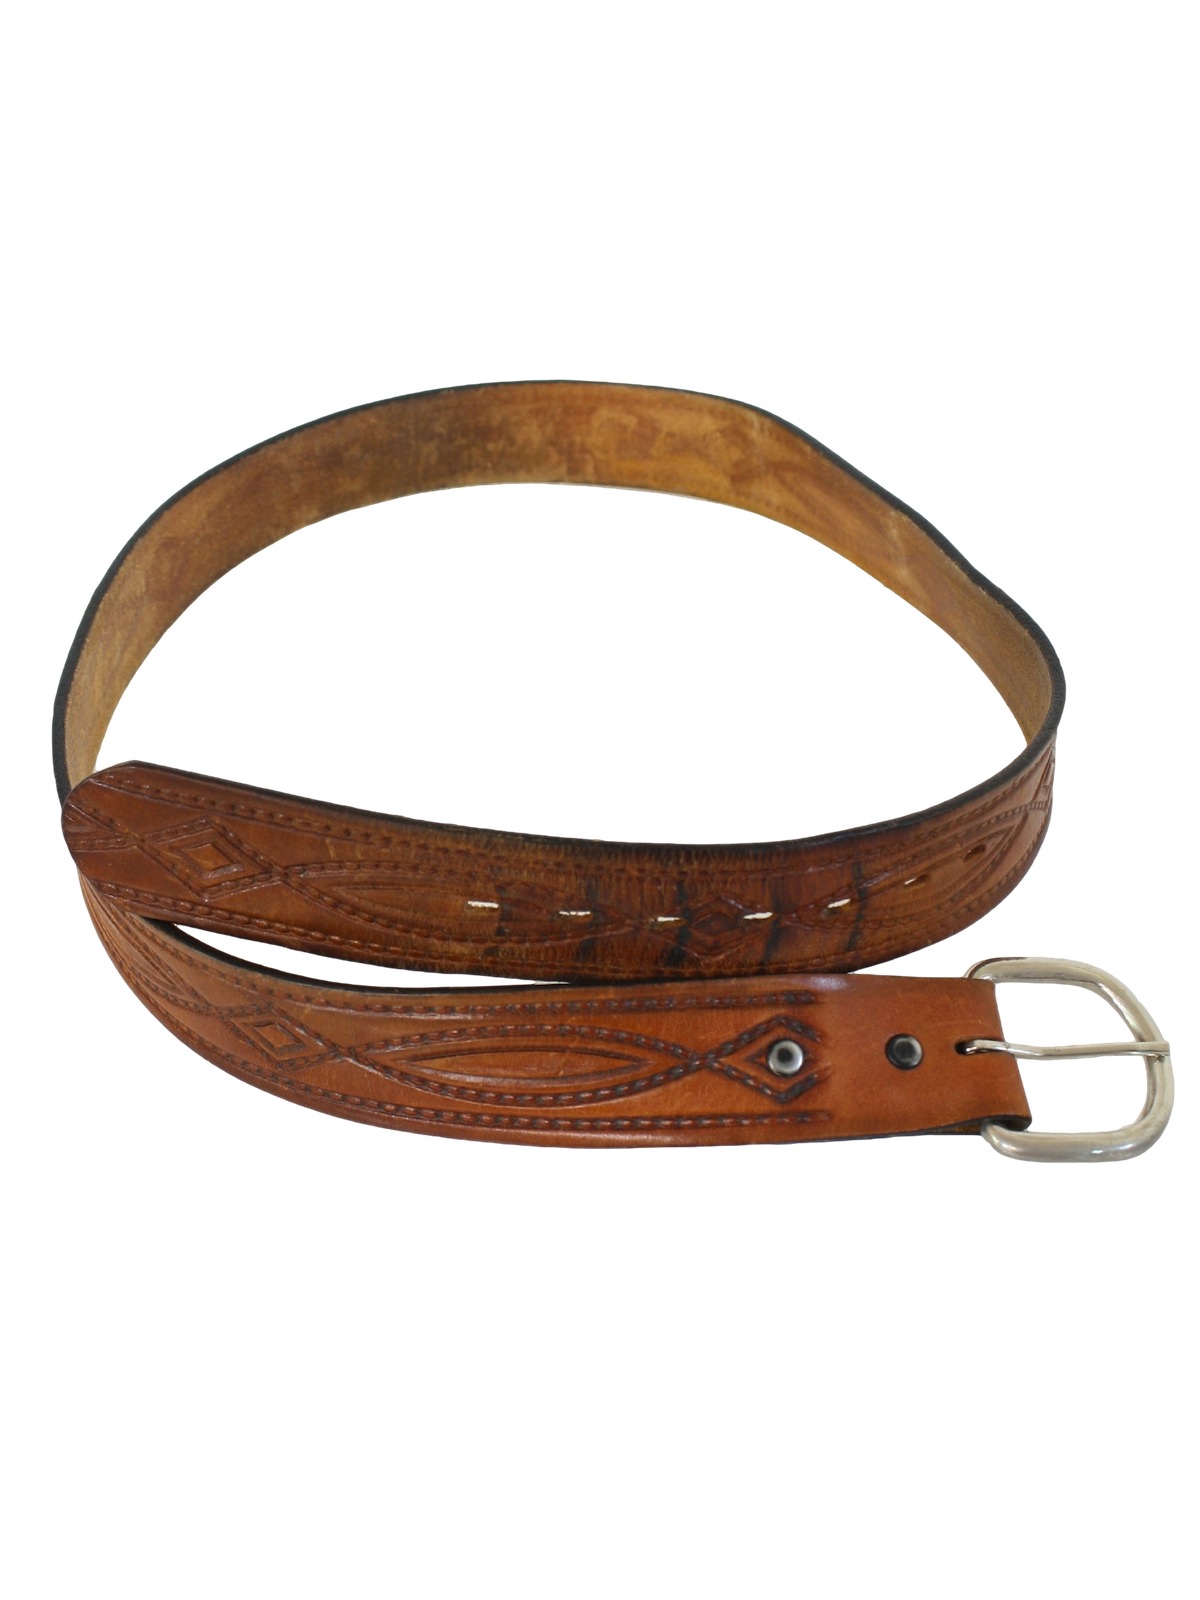 Seventies Missing mark Belt: 70s -Missing mark- Mens tan woven leather ...